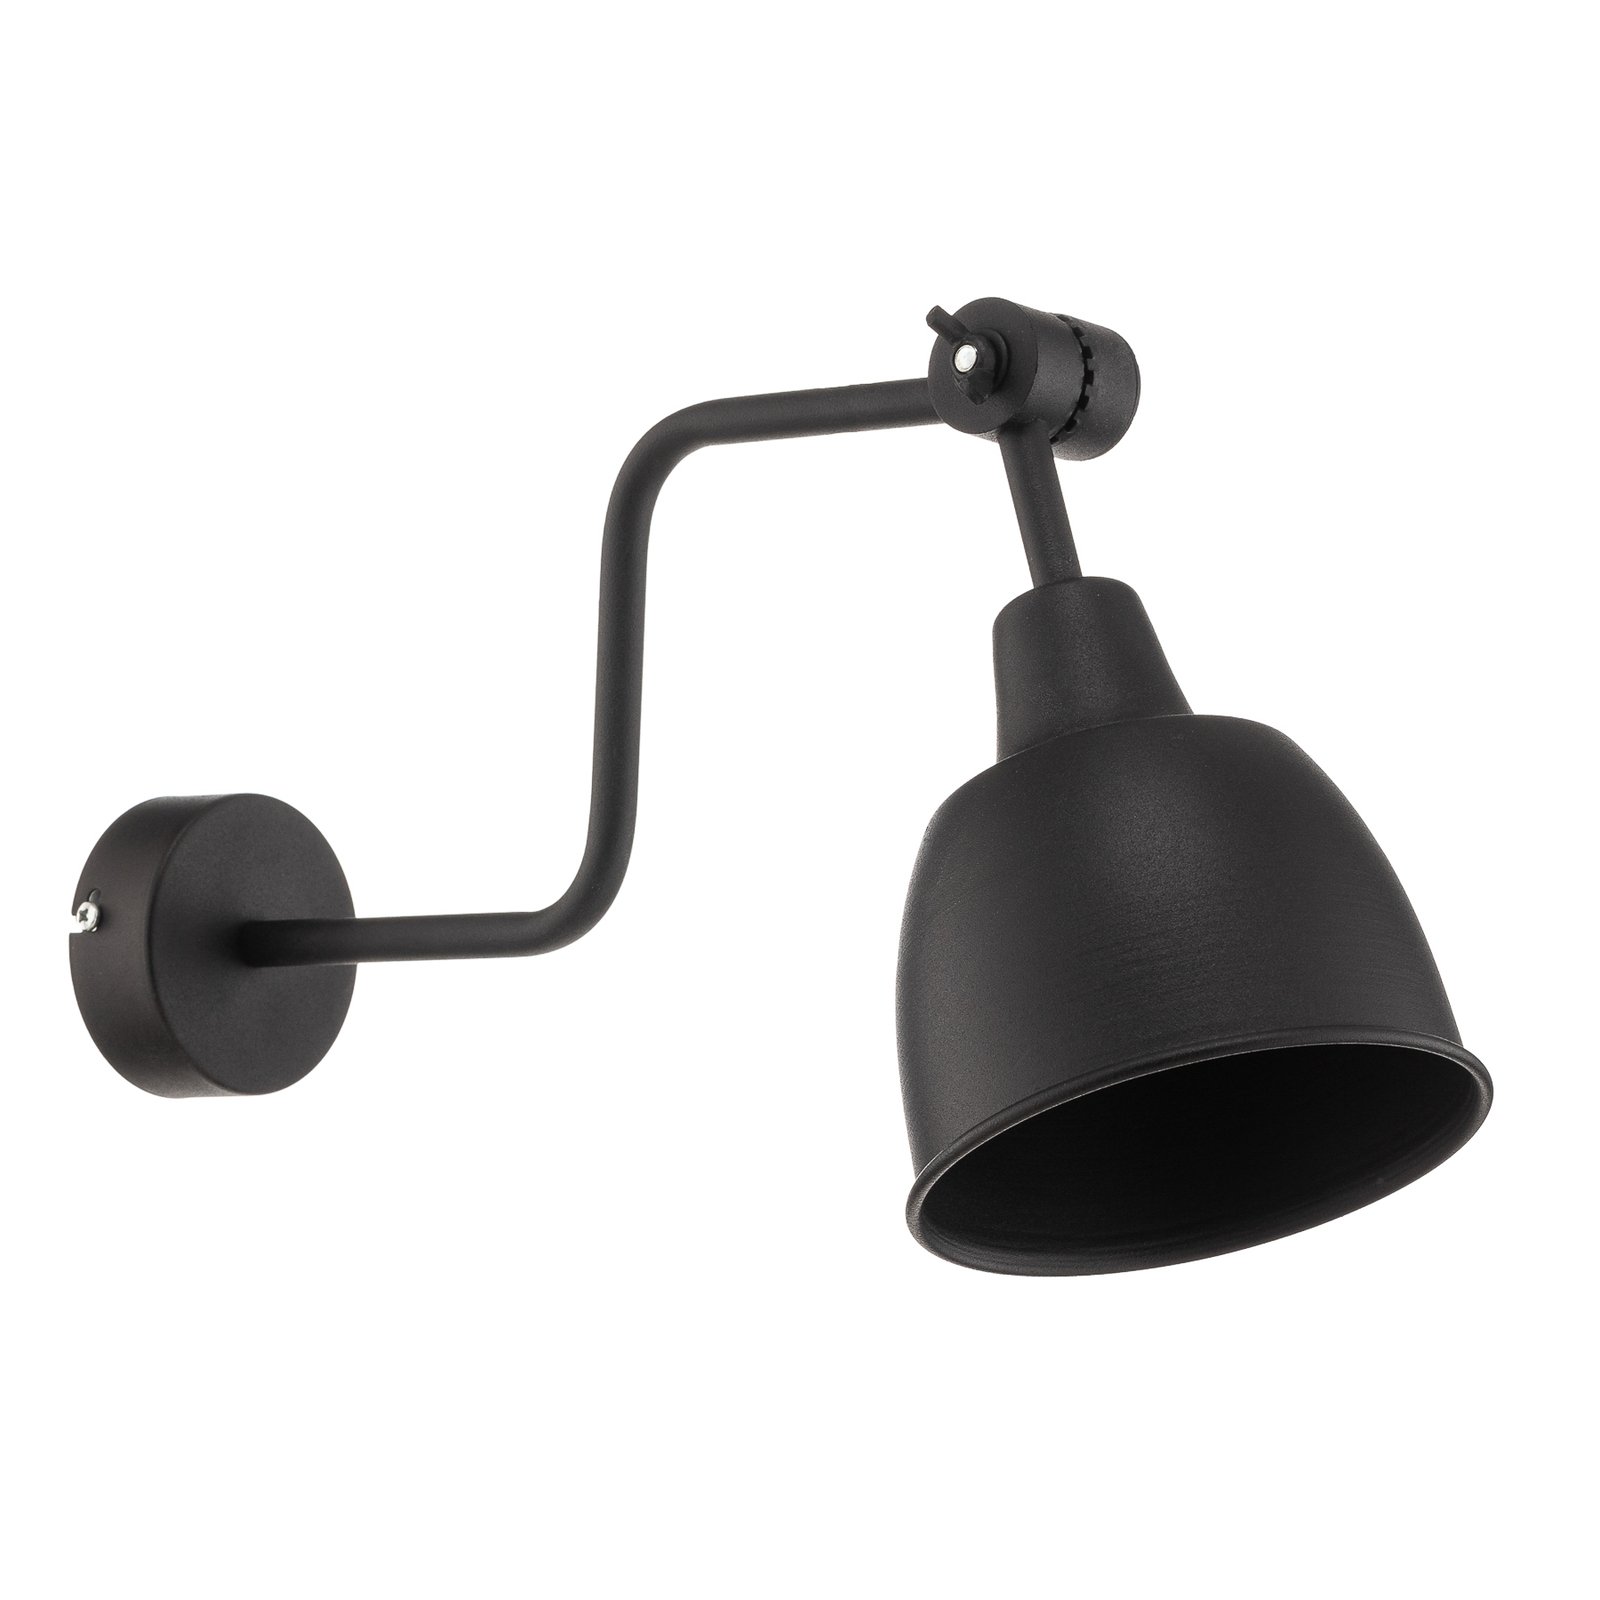 990 wall light, one-bulb, black